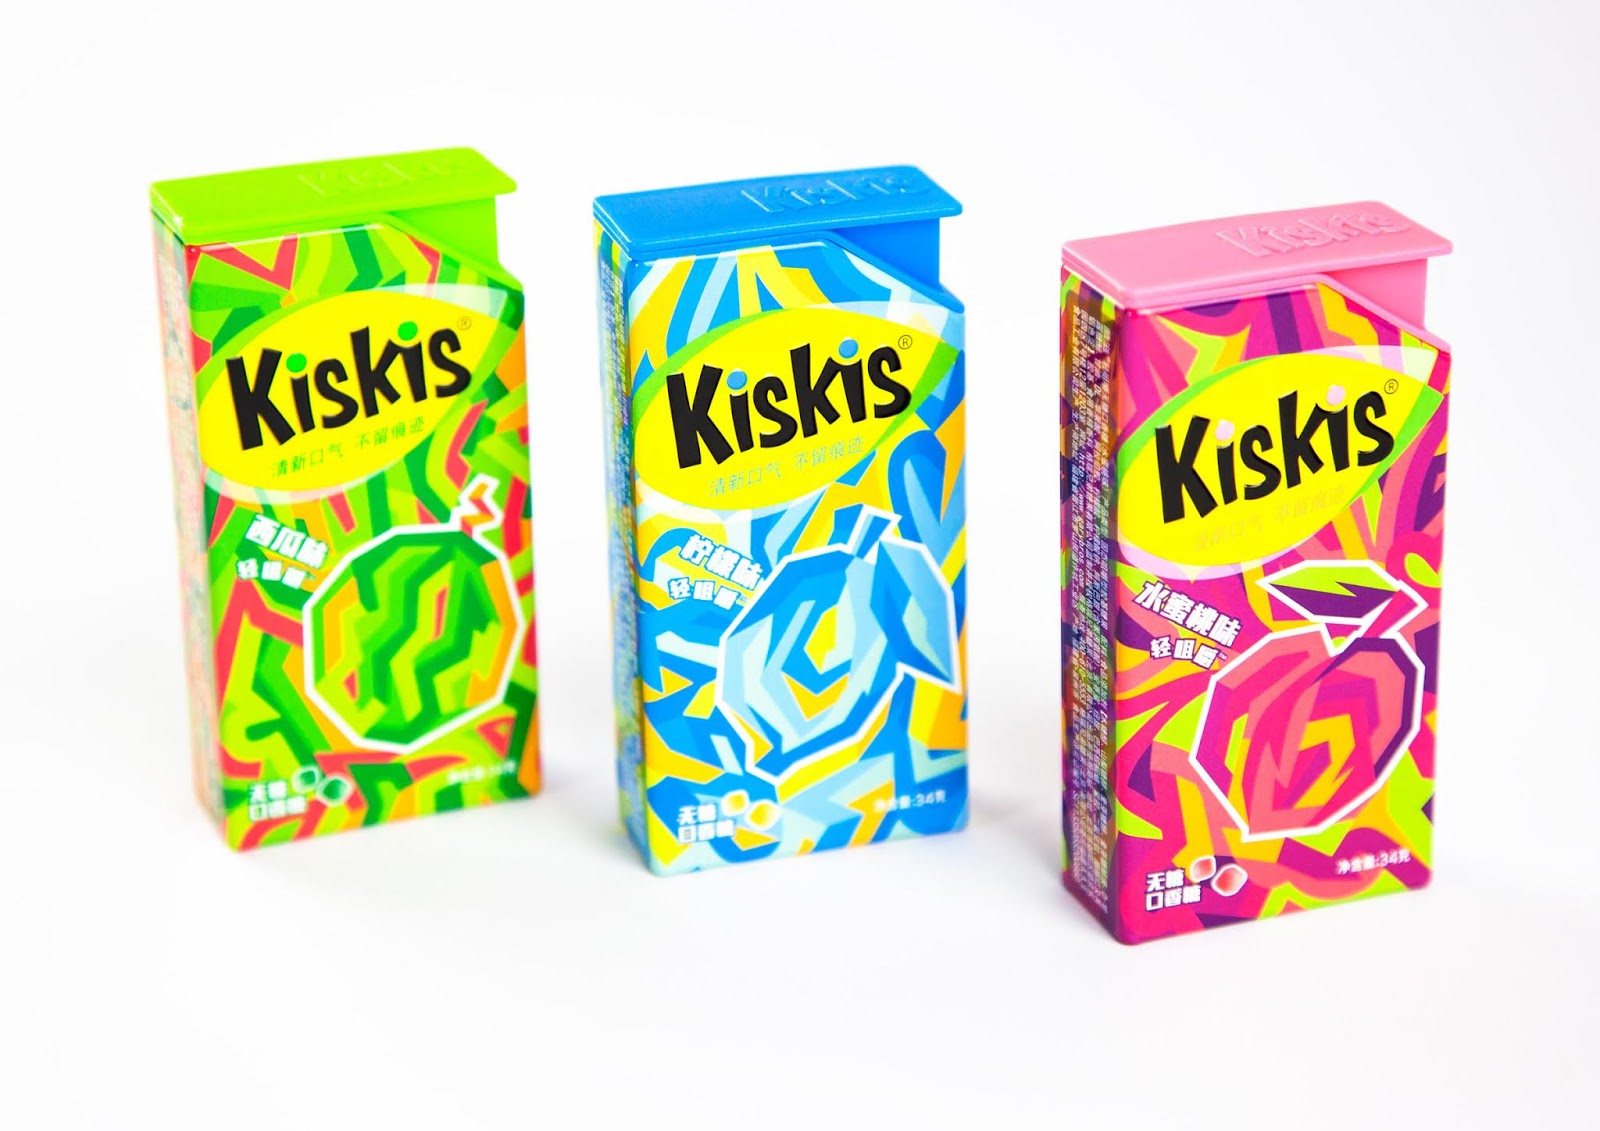 KisKis! My boyfriend is a mint candy 💕